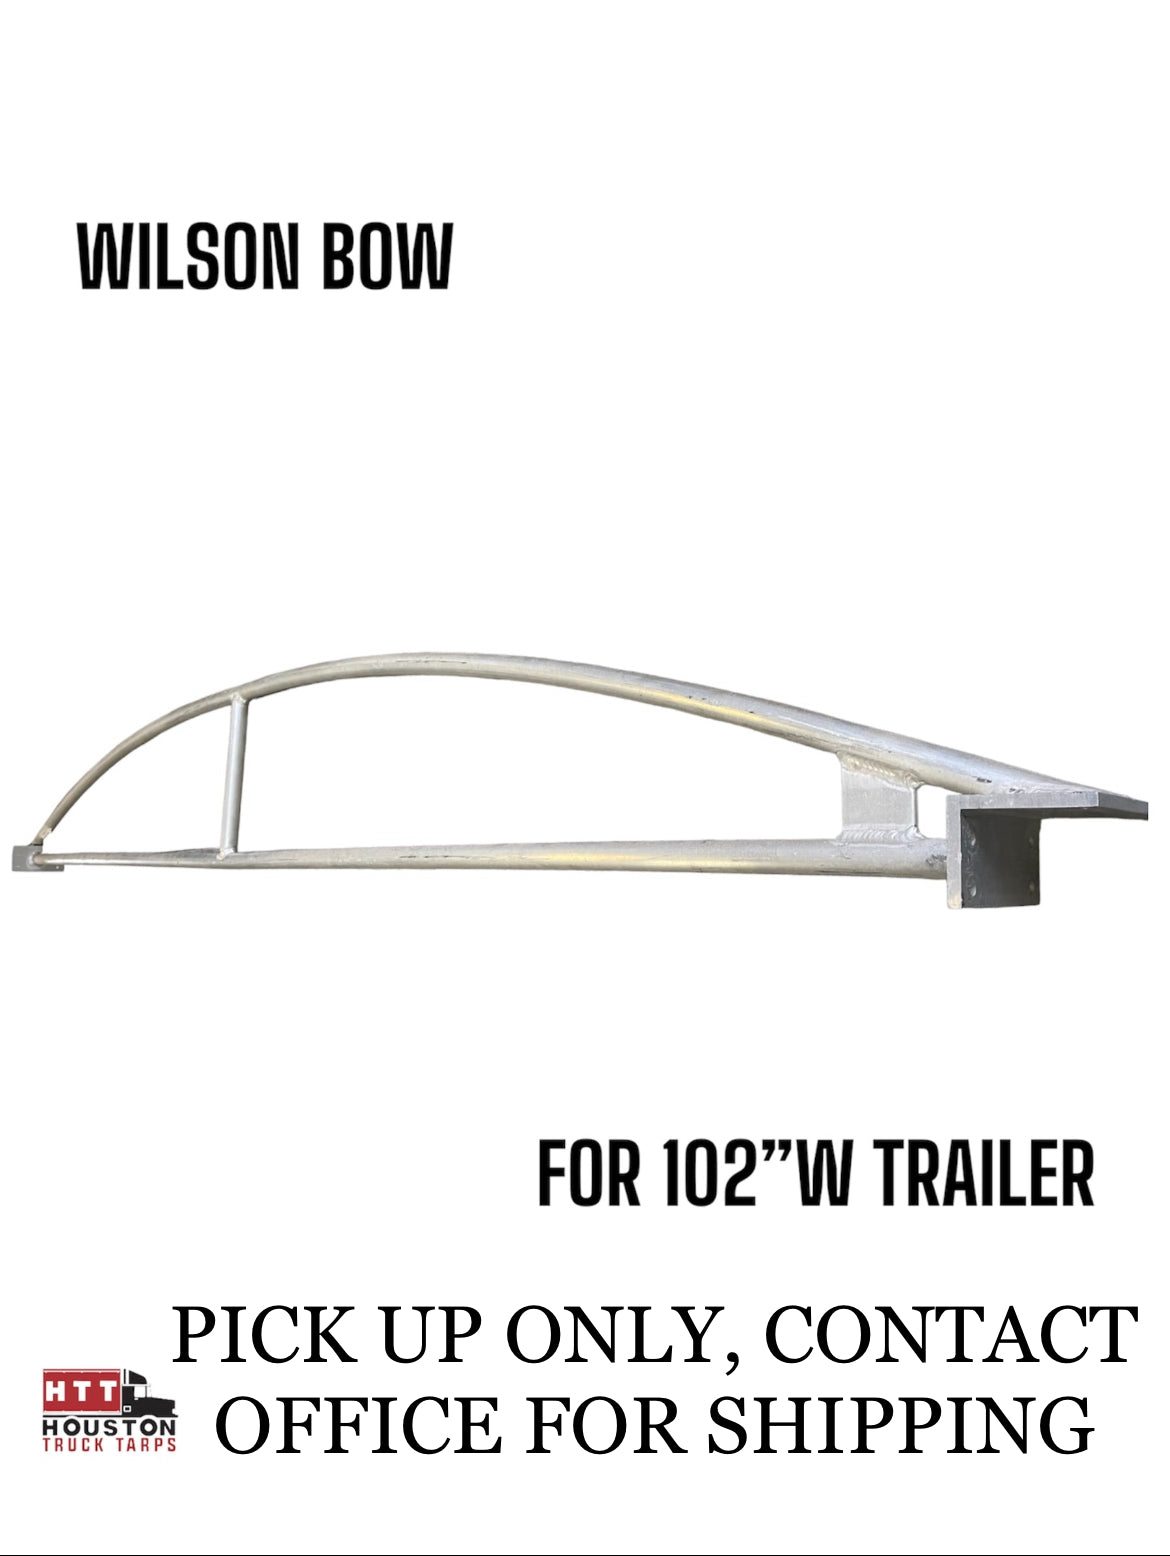 WILSON Bow For 102” Trailer